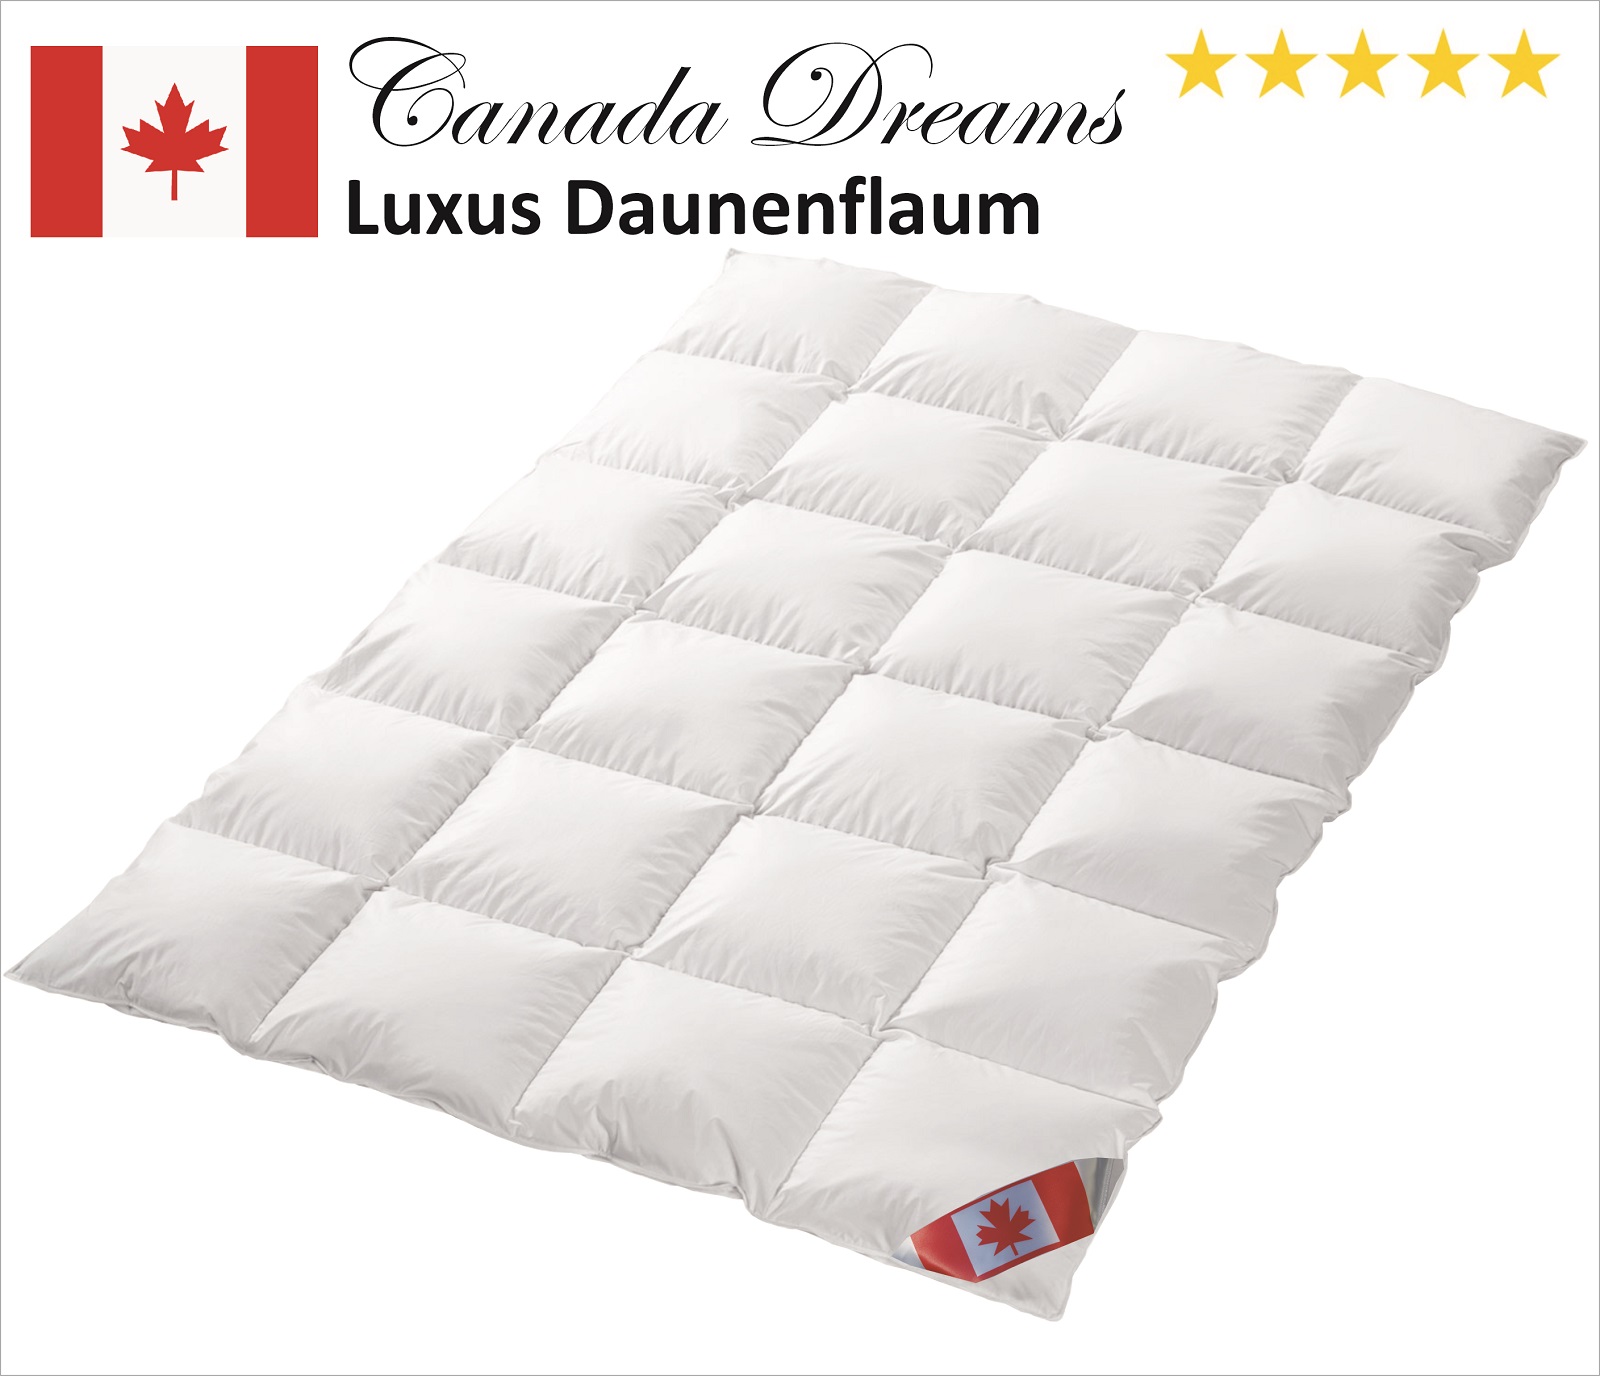 Canada Dreams Luxus Übergangs Daunendecke Daunenflaum CD 2 155x220 cm